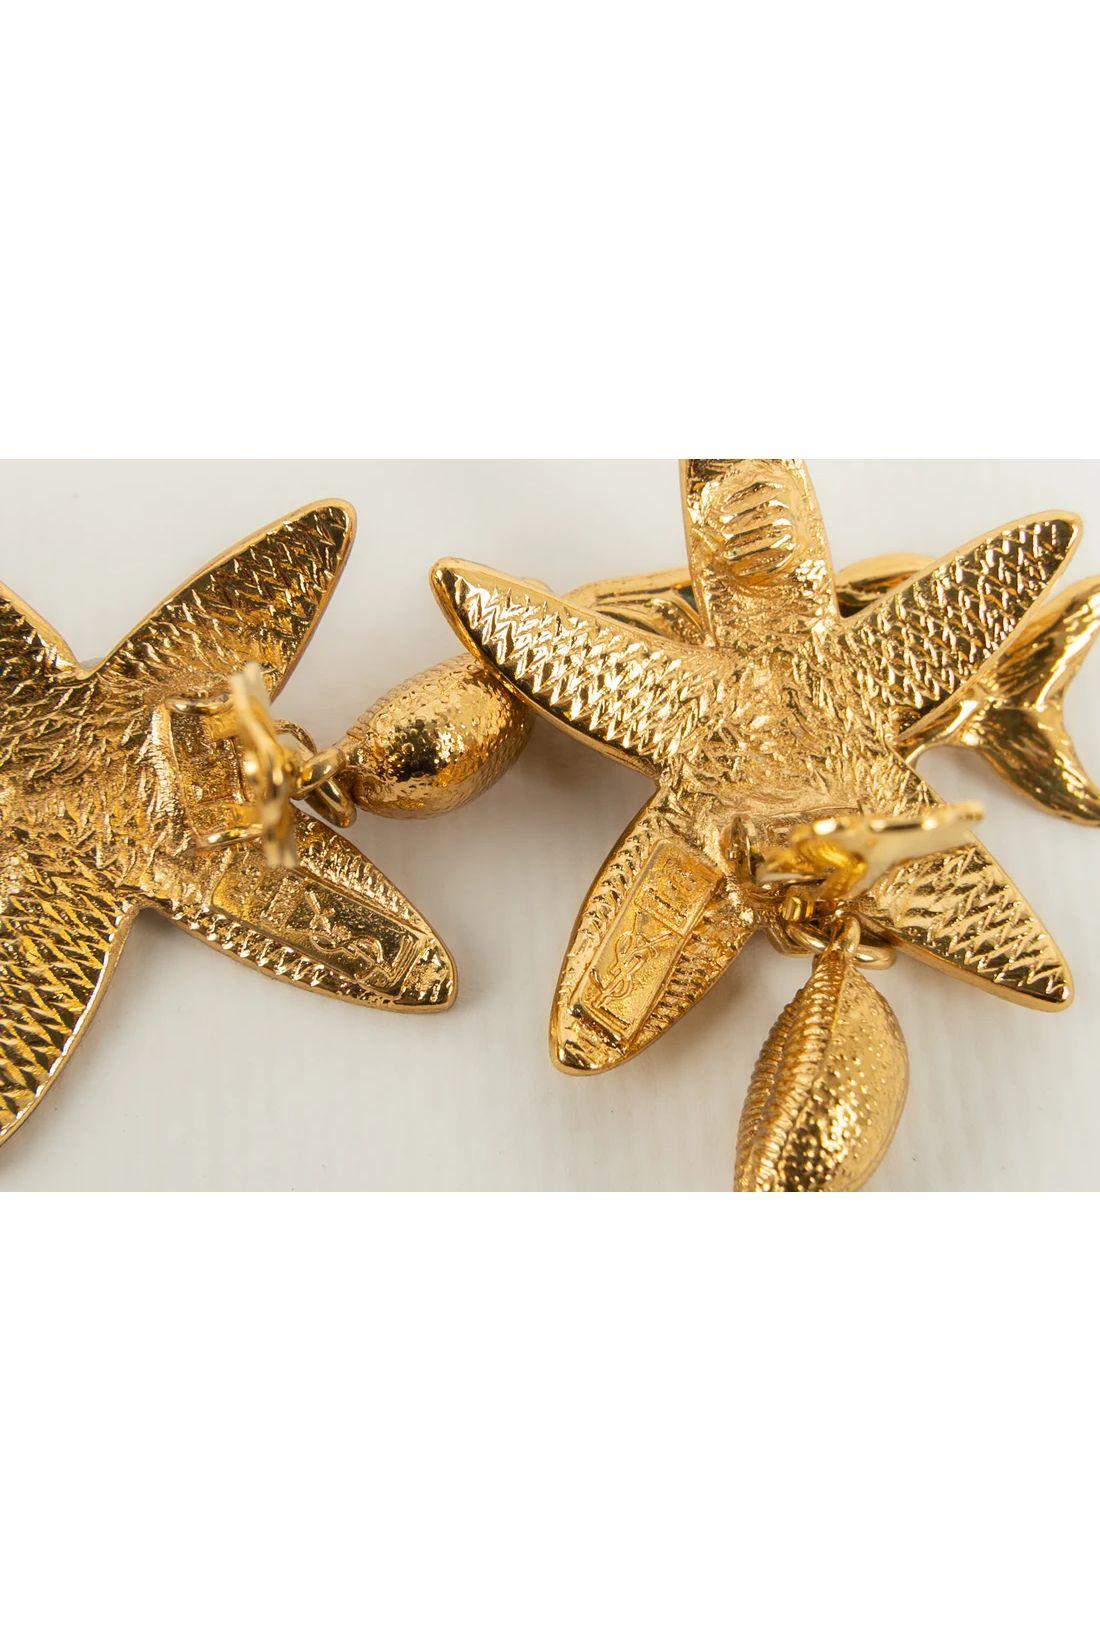 Yves Saint Laurent Earrings in Gold Metal and Green Enamel For Sale 1